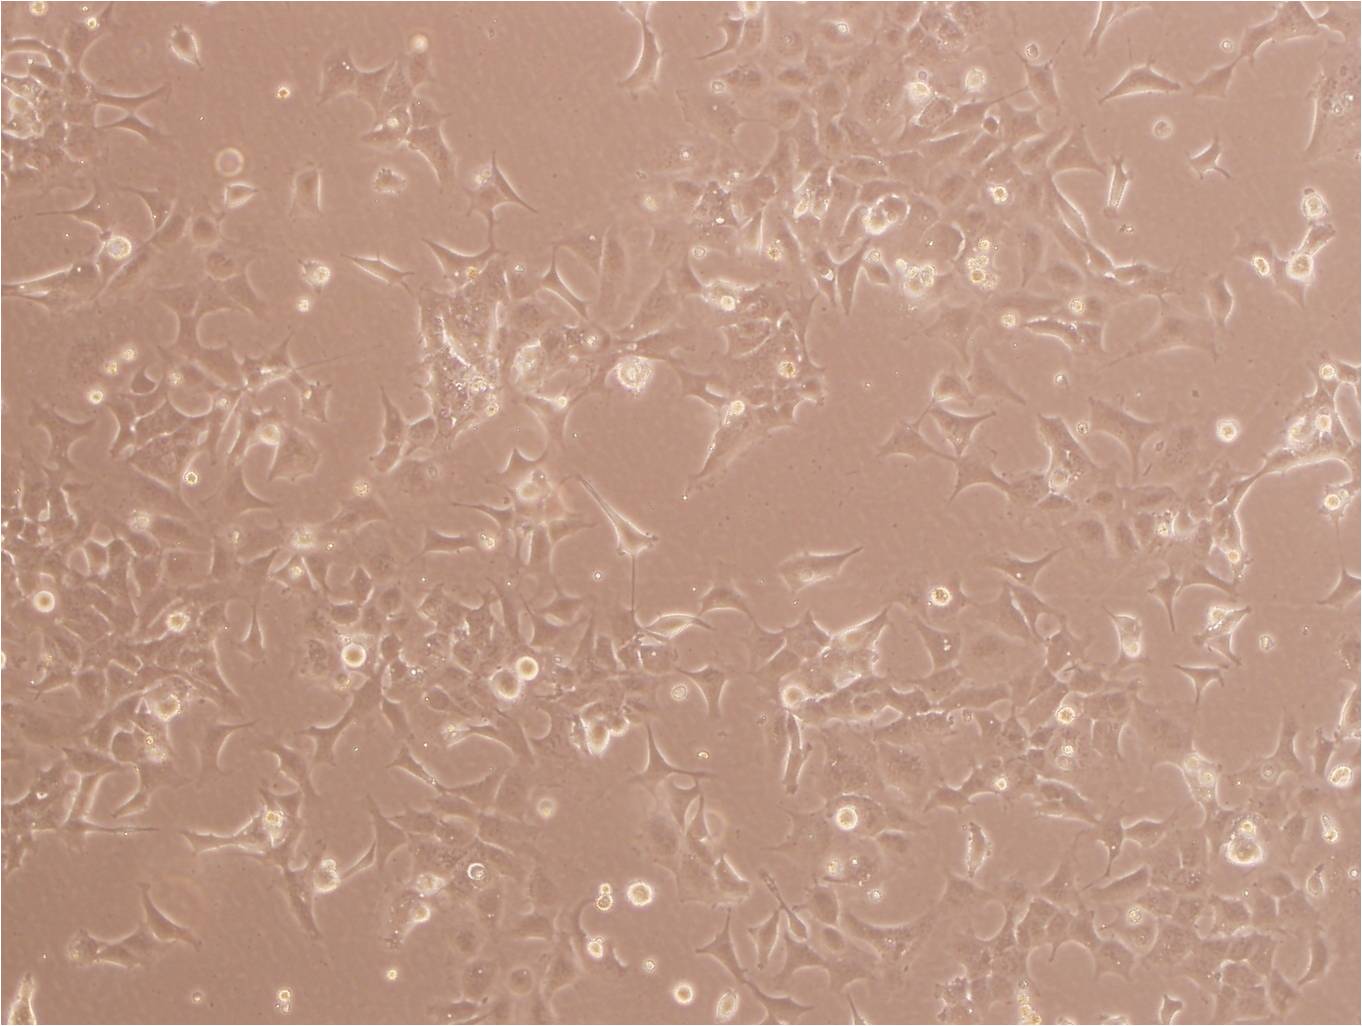 CaES-17 Fresh Cells|人食管癌细胞(送STR基因图谱),CaES-17 Fresh Cells